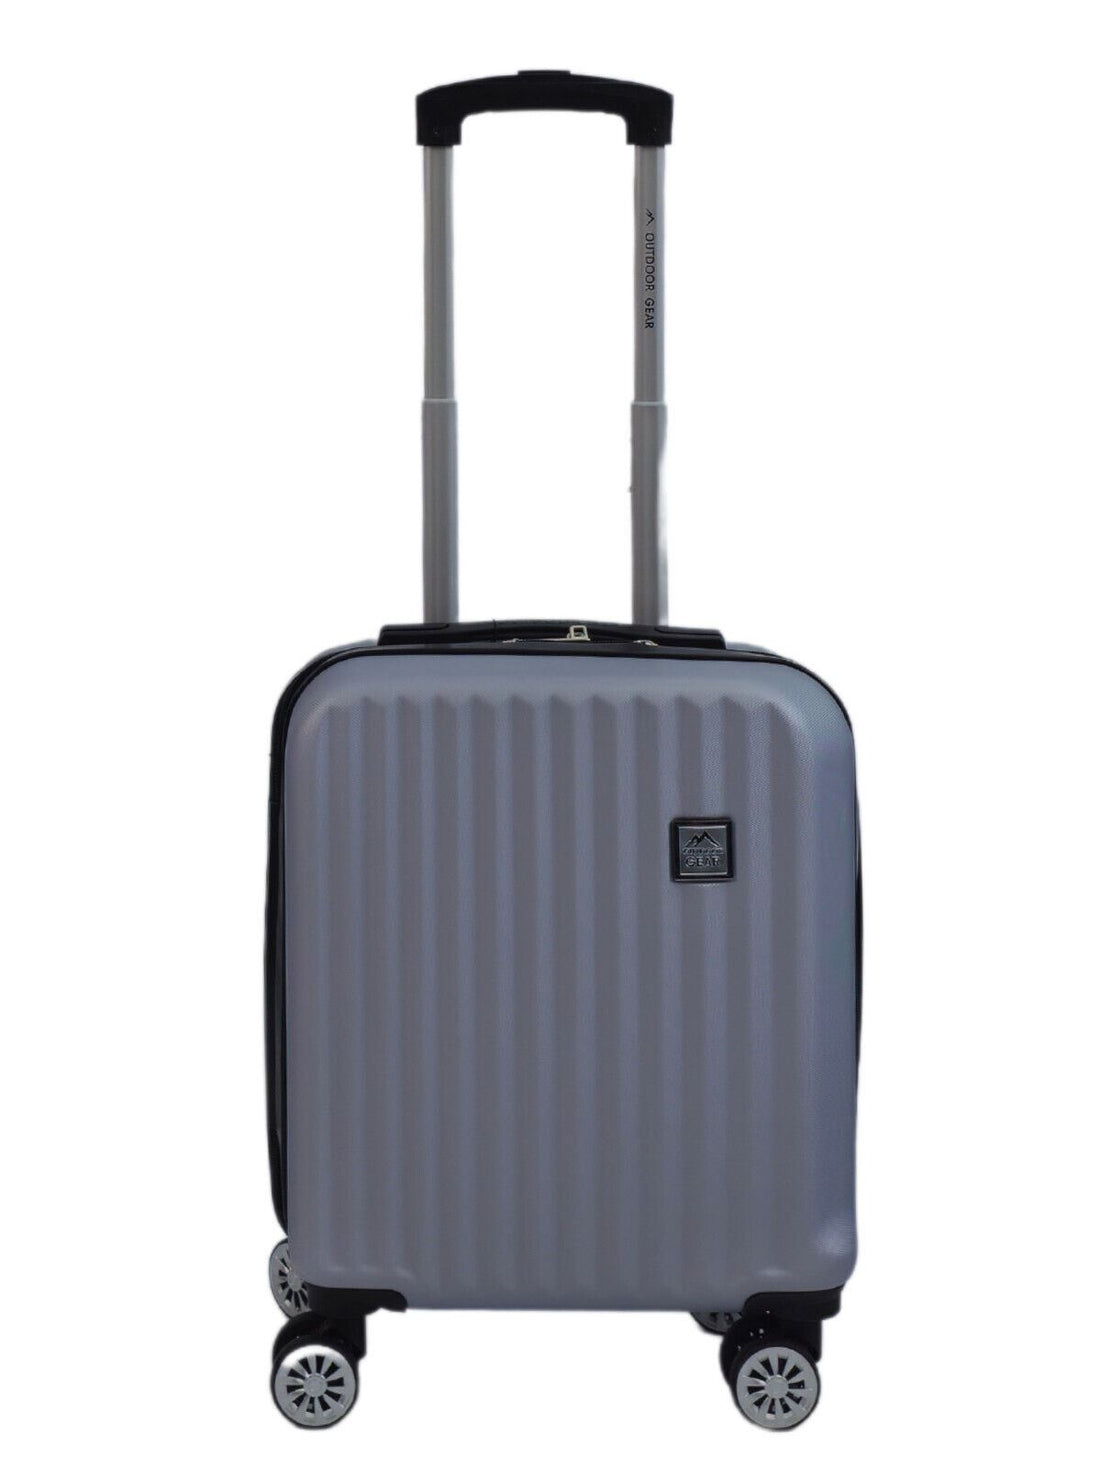 Albertville Underseat Hard Shell Suitcase in Silver